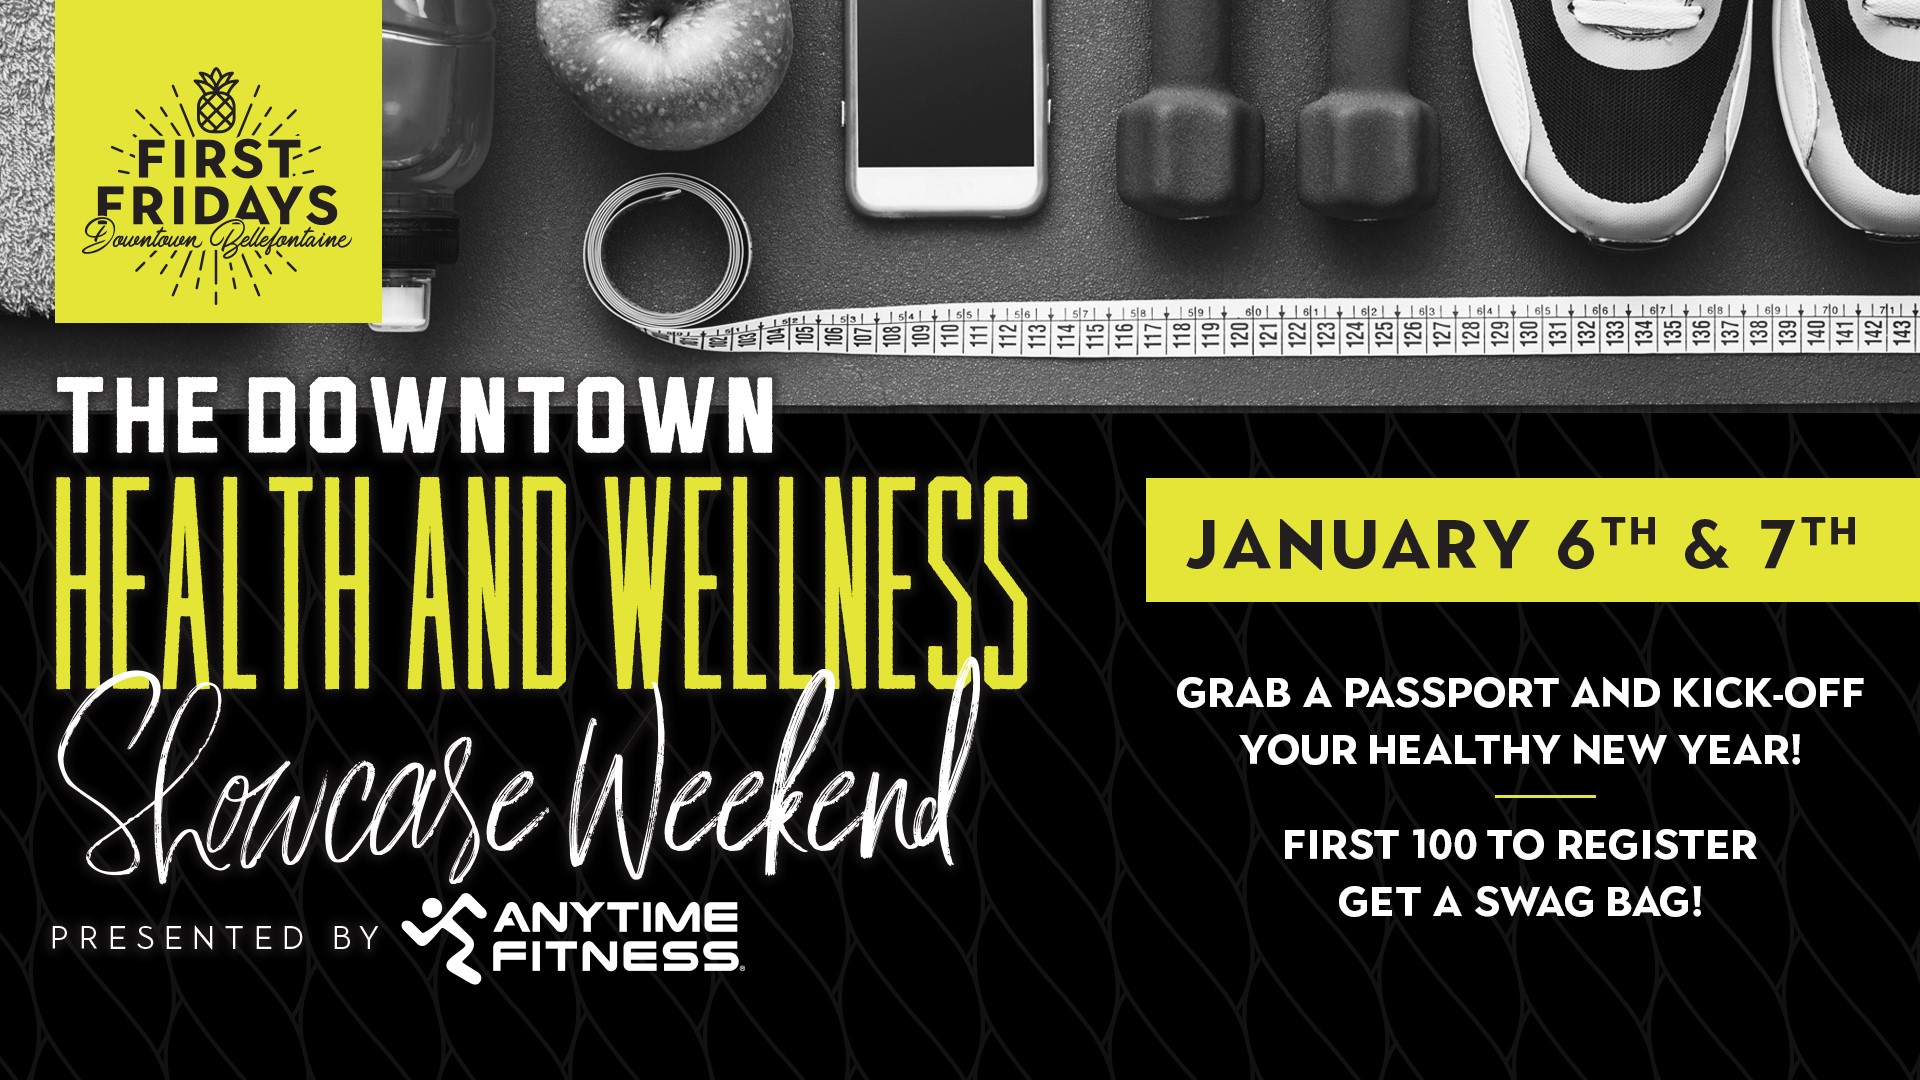 Downtown Health & Wellness Showcase Weekend